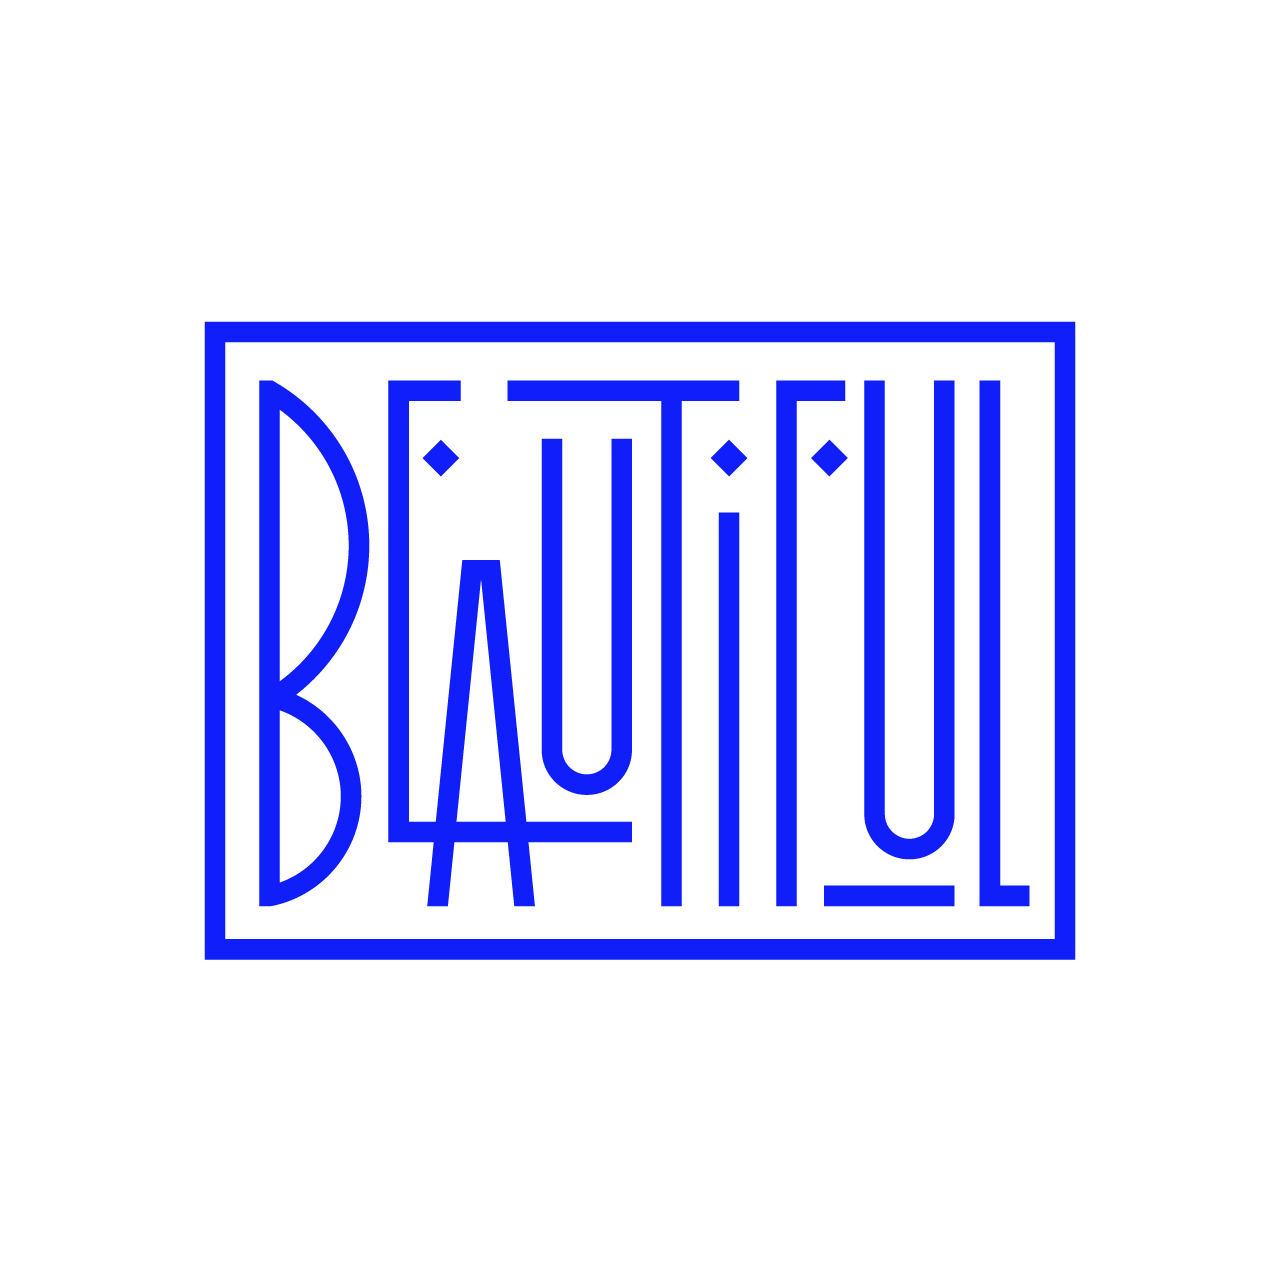 Rafael Serra创意字体设计作品